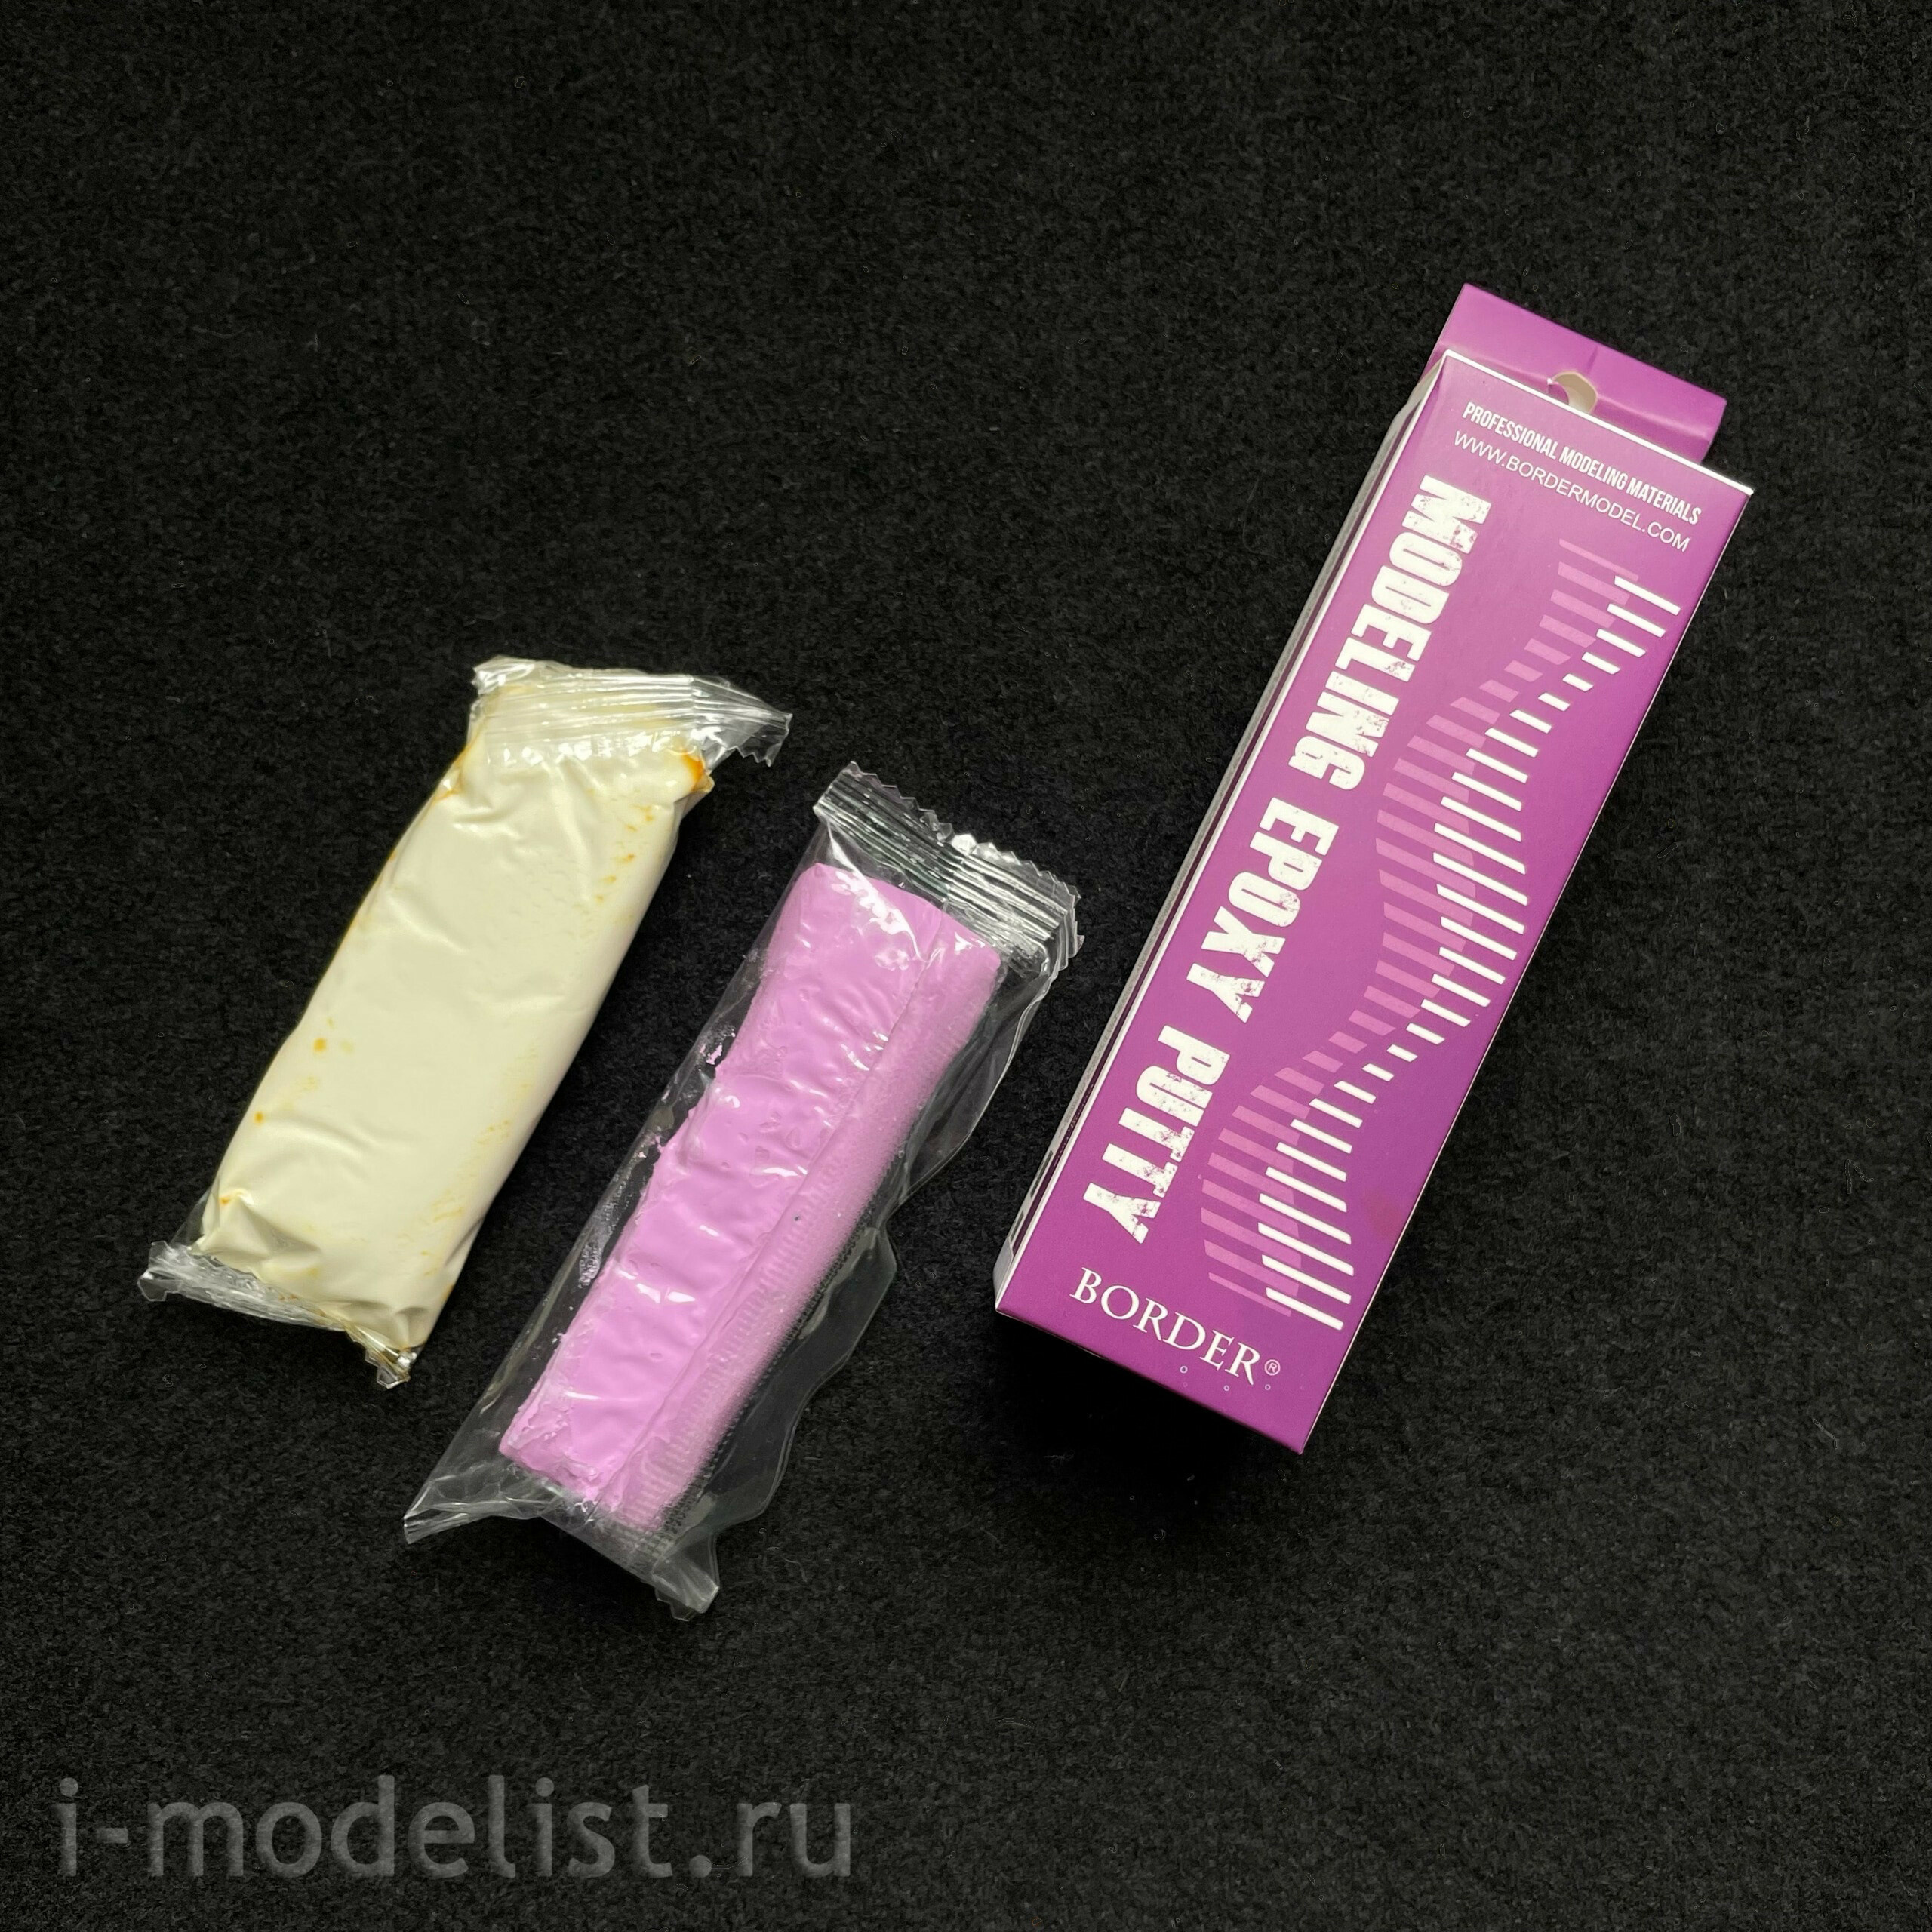 BD0122 Border Model Modeling epoxy putty, purple (50 g + 50 g)